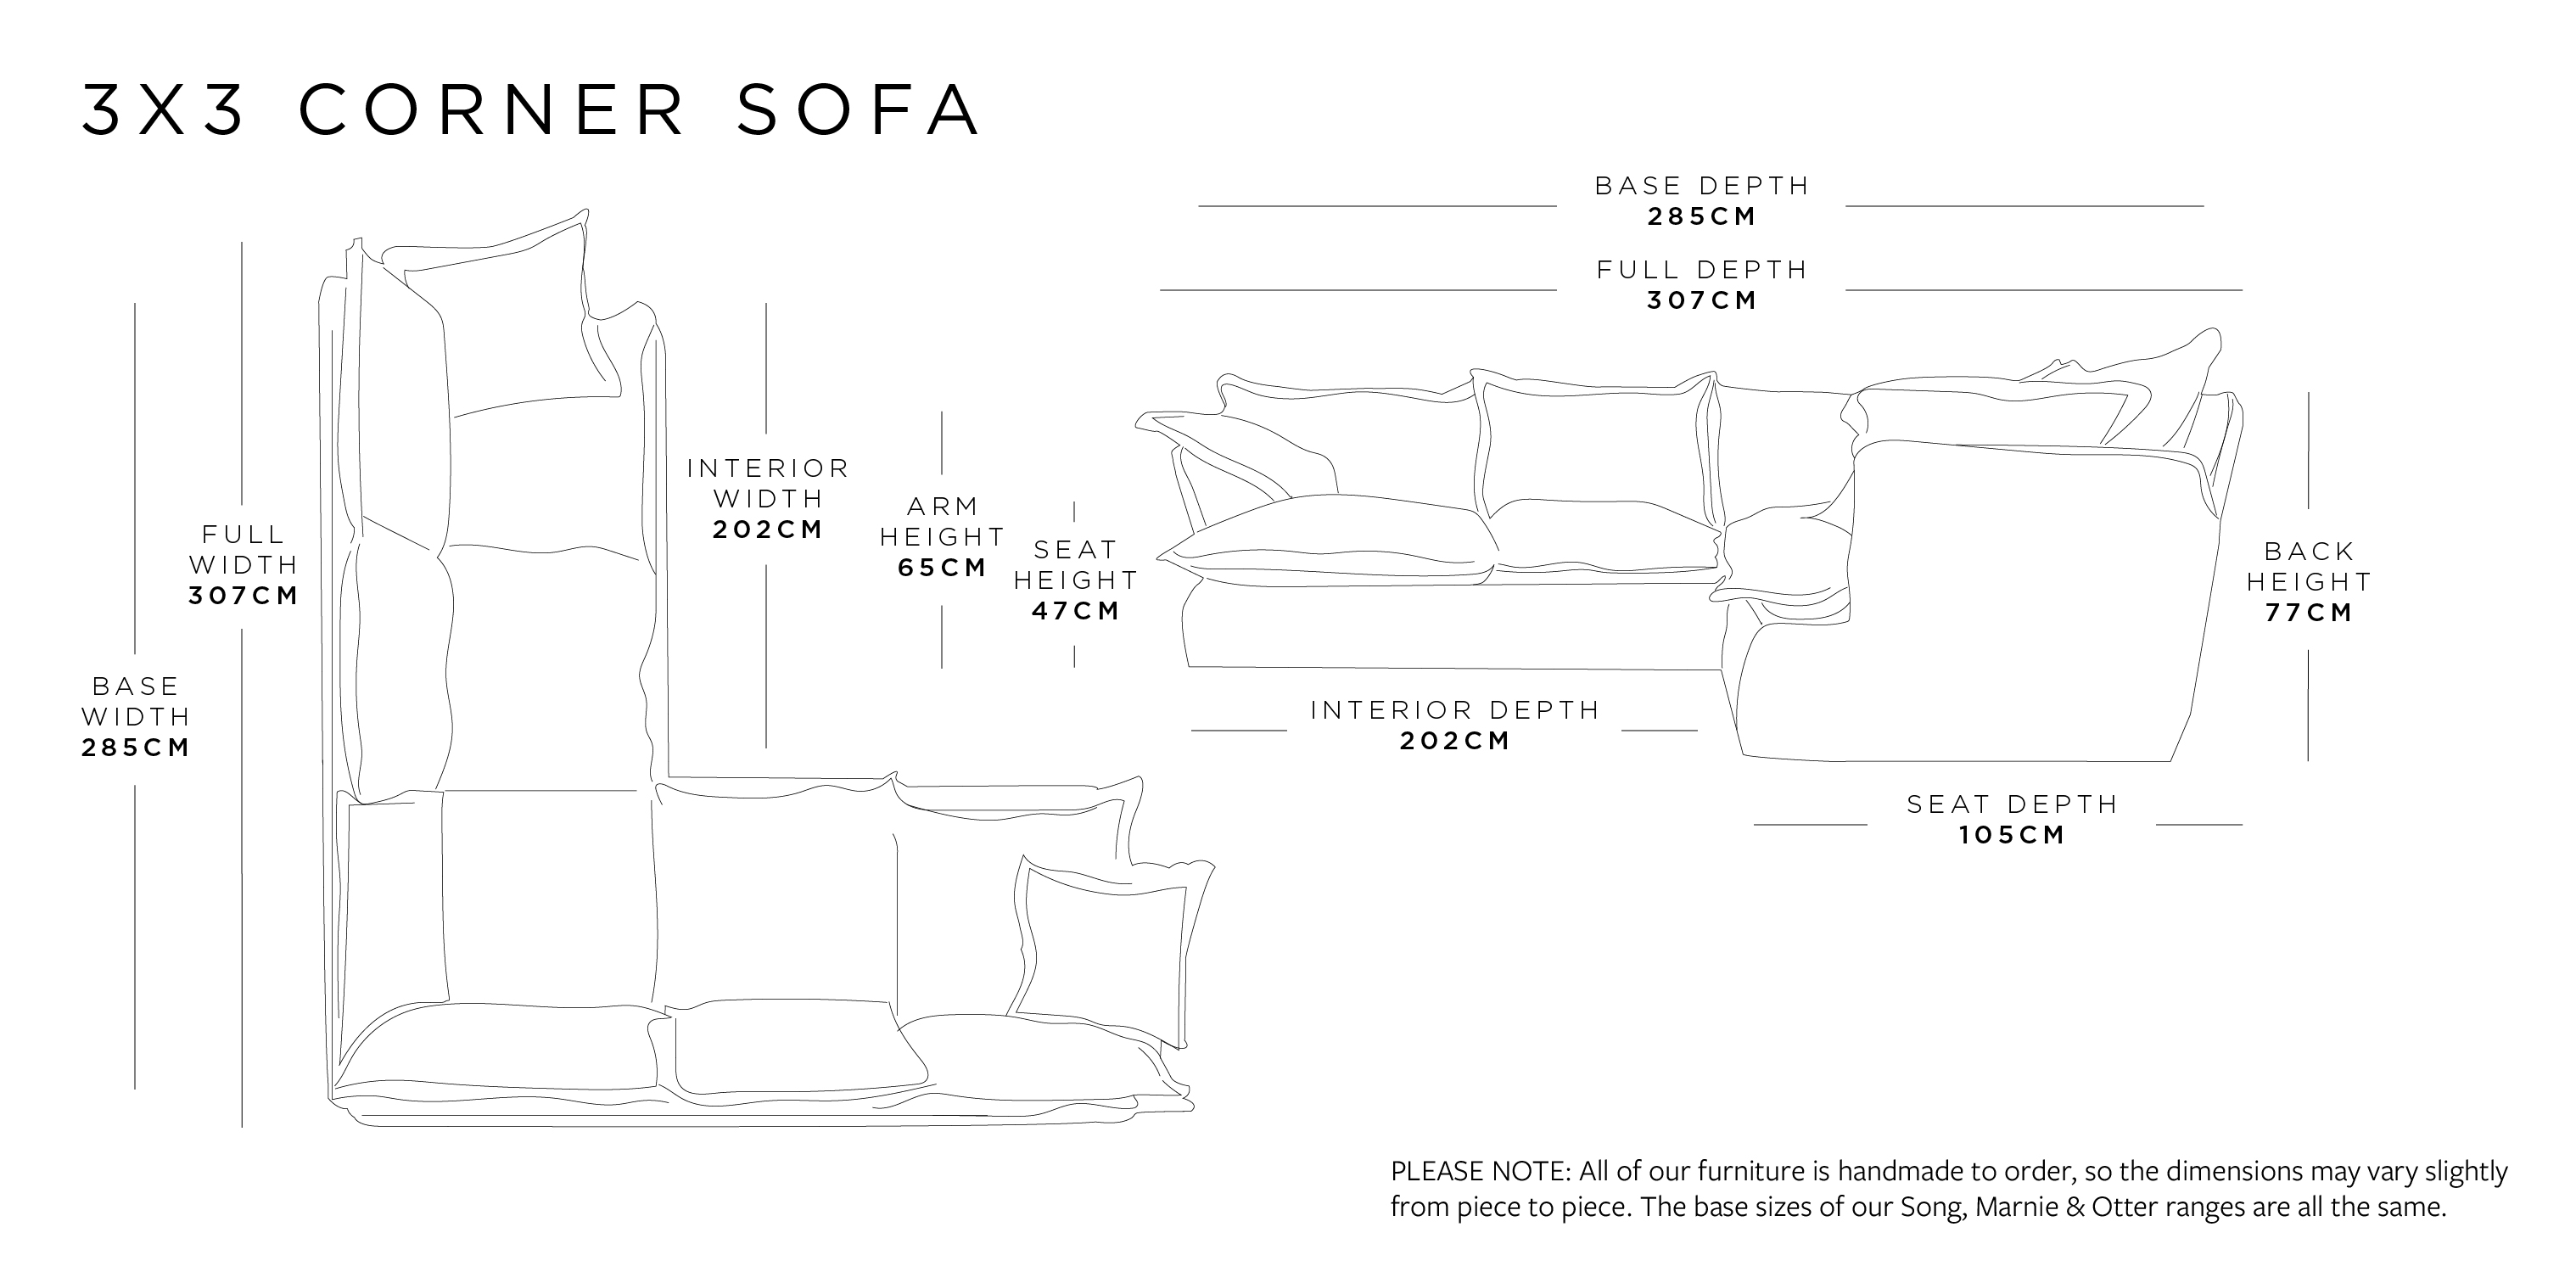 3x3 Corner Sofa | Marnie Range Size Guide